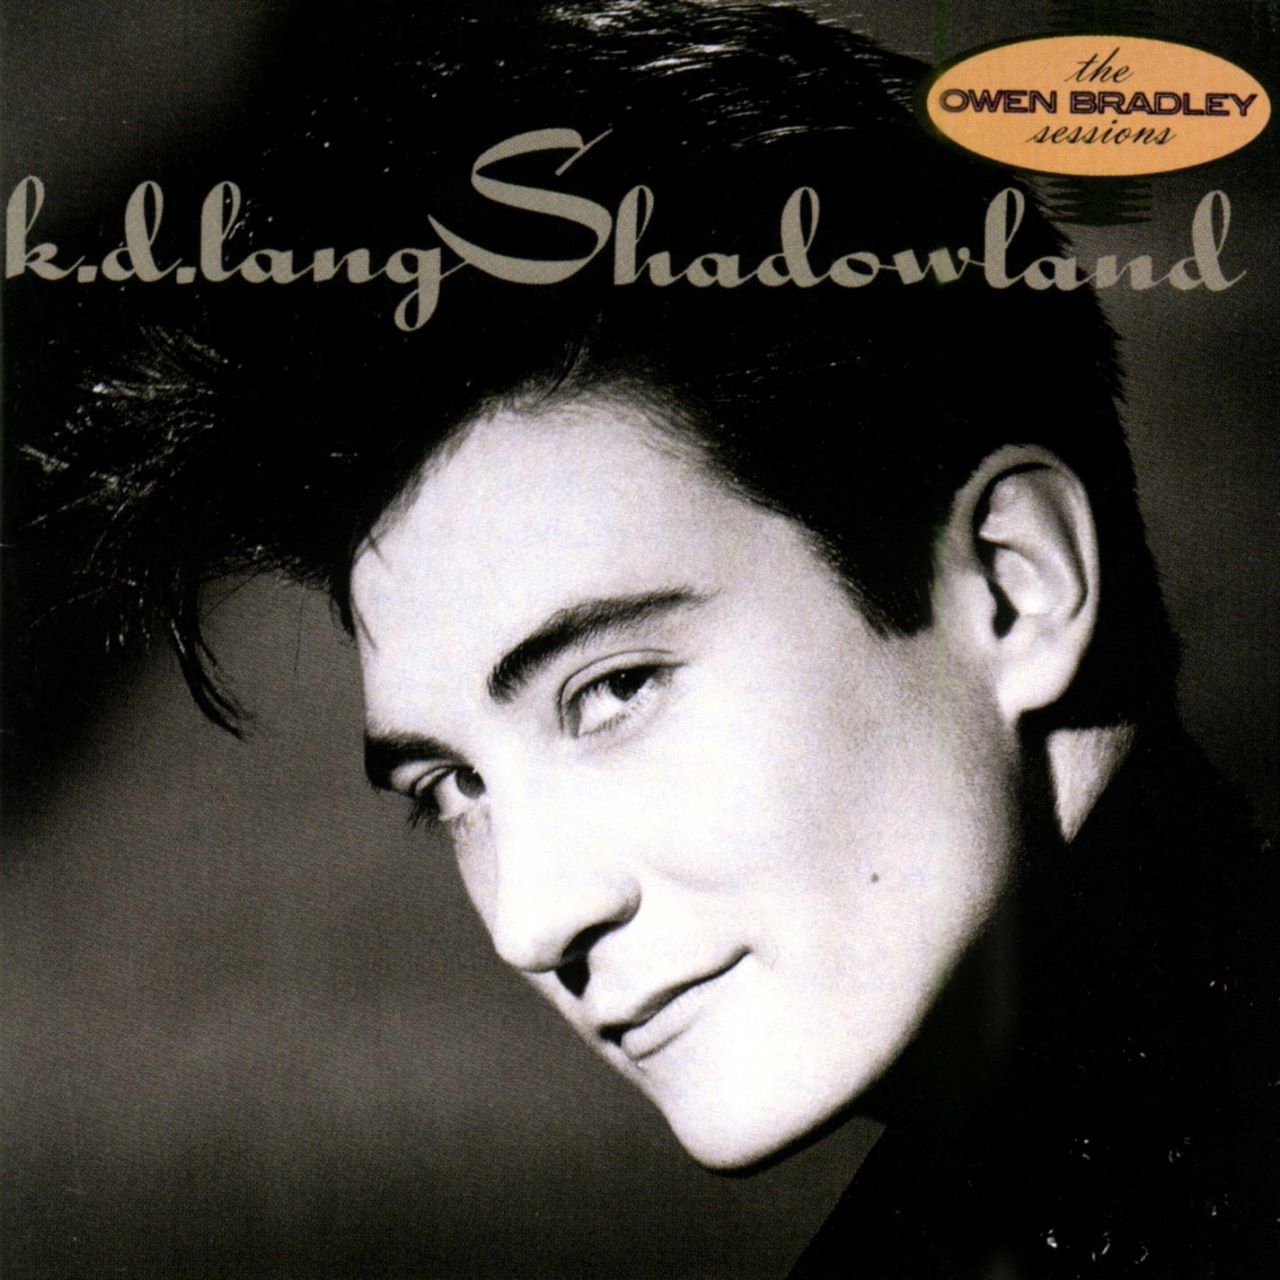 K.D. lang - Shadowland cover album